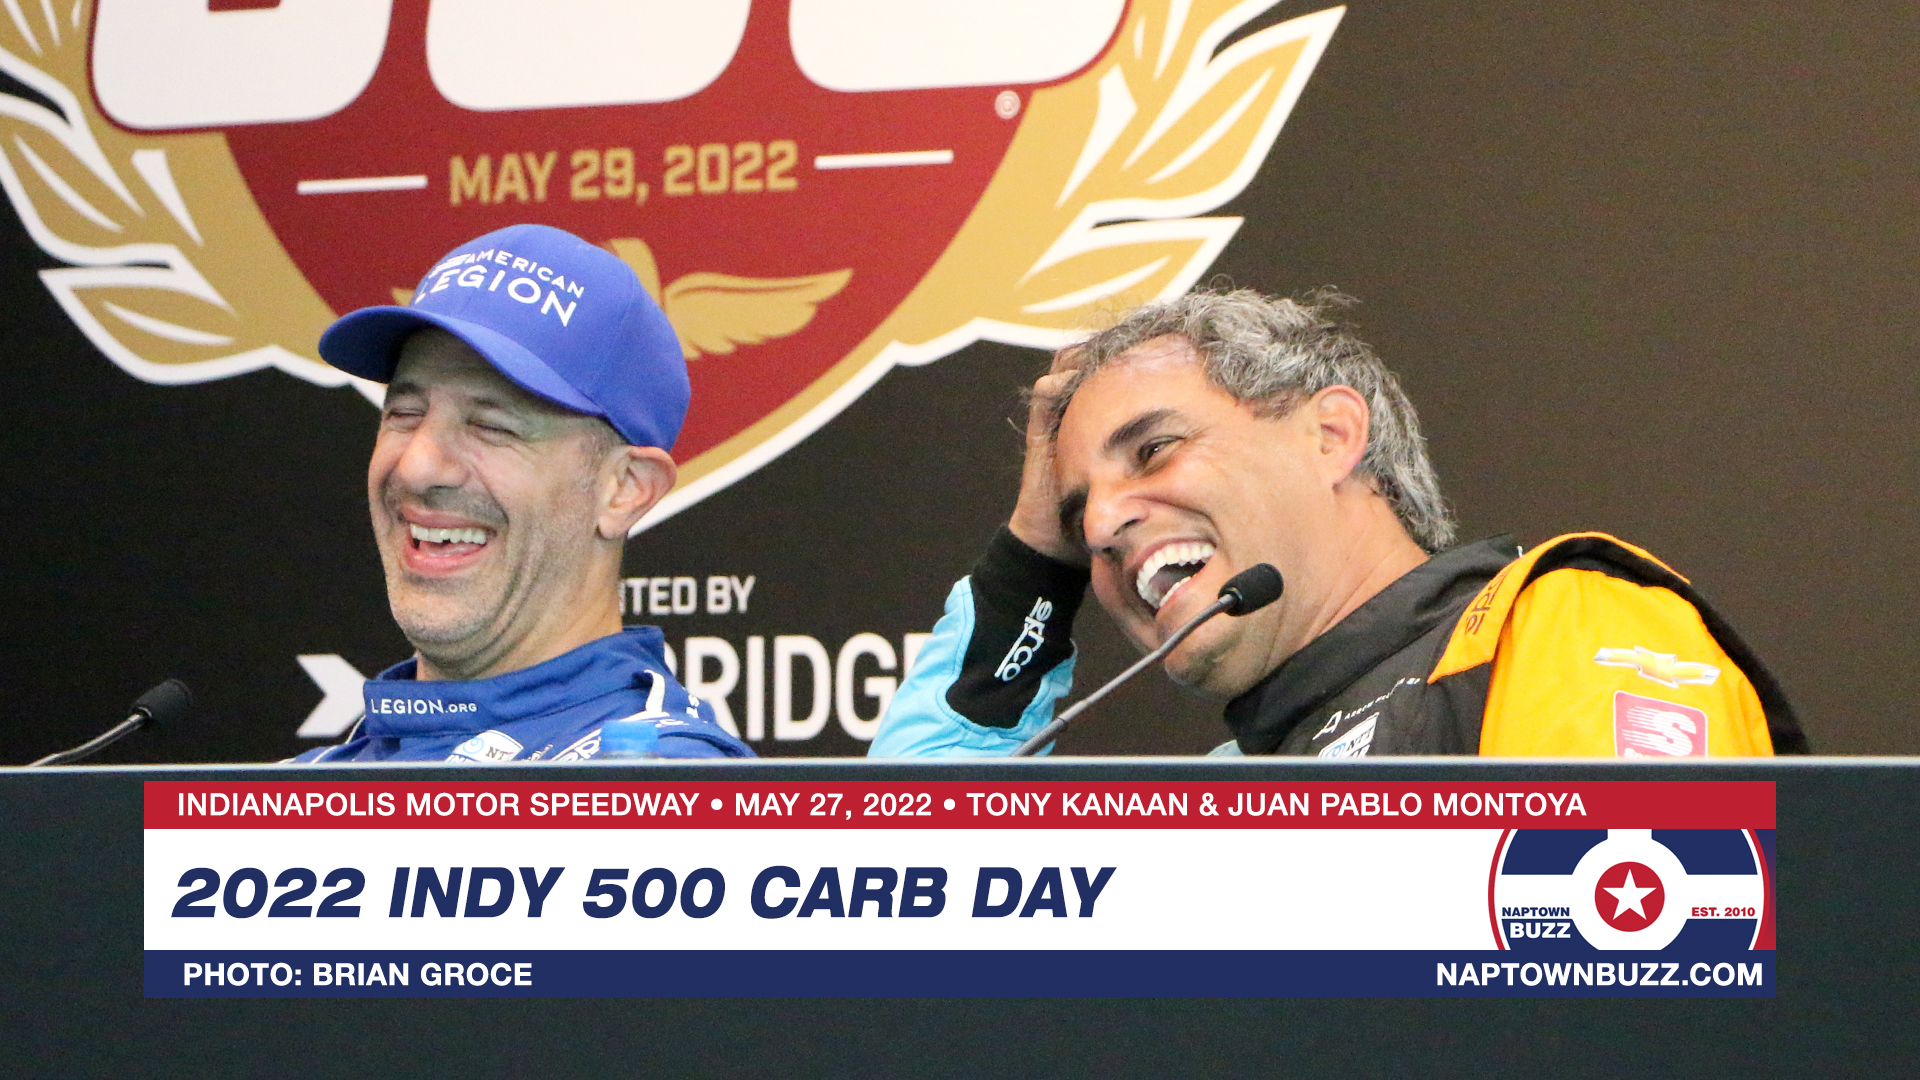 Indy 500 Carb Day May 27, 2022 Tony Kanaan-Juan Pablo Montoya